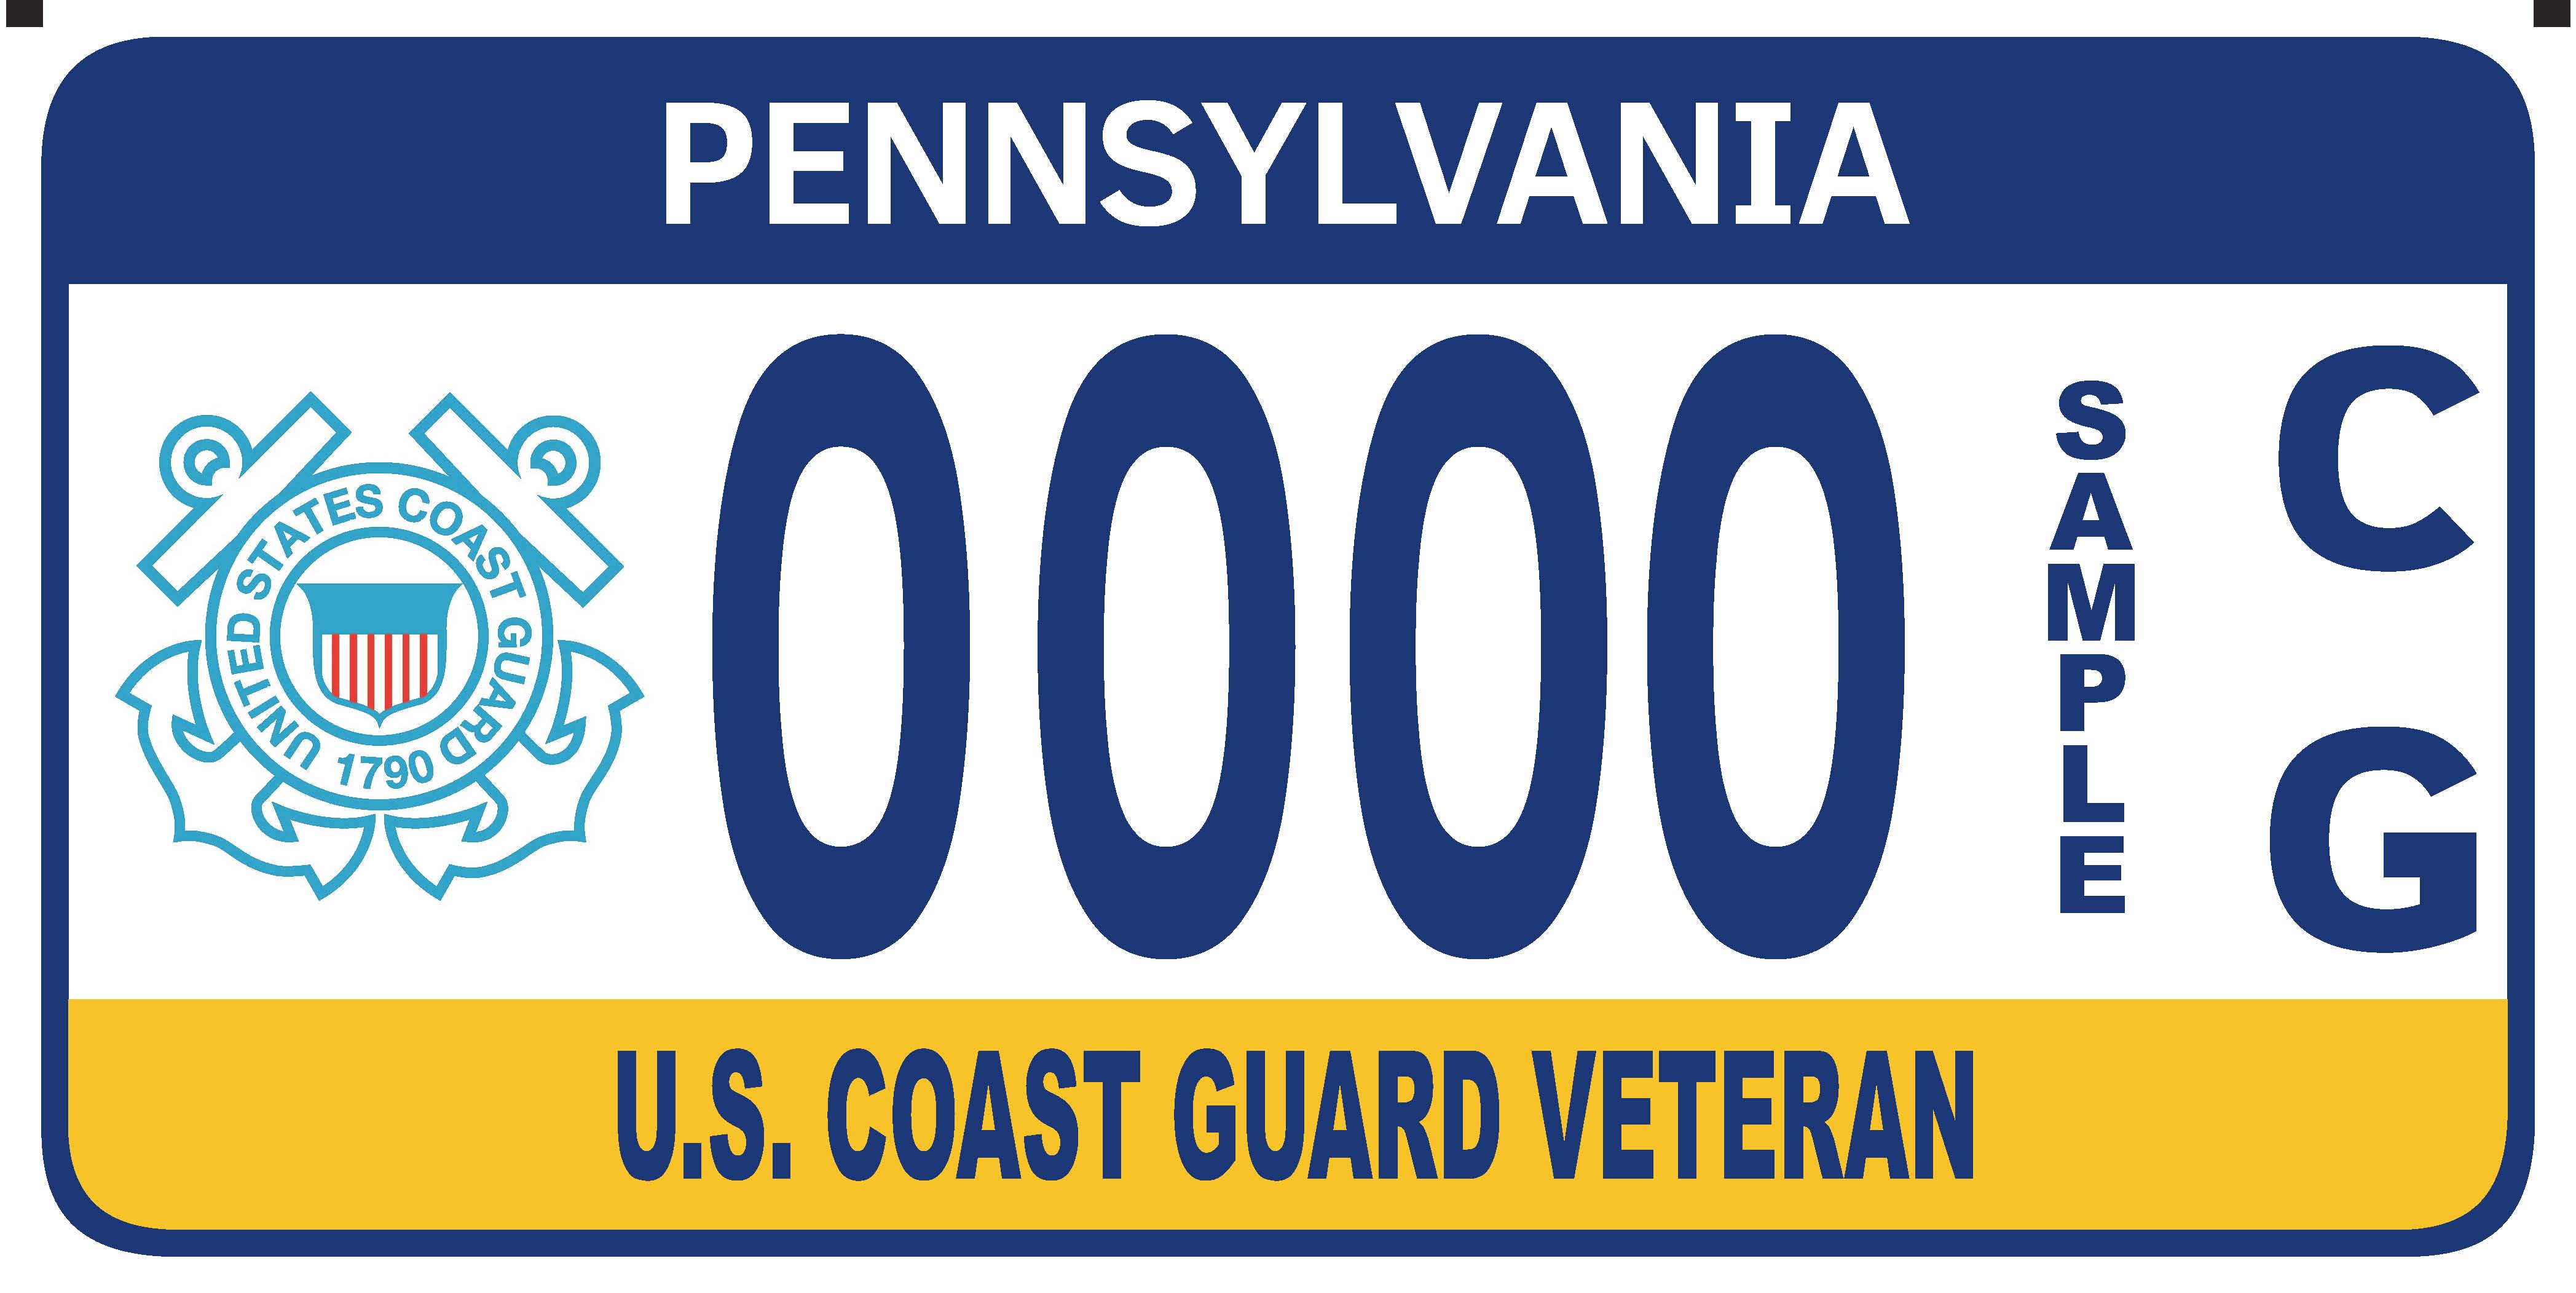 U.S. Coast Guard Veteran plate